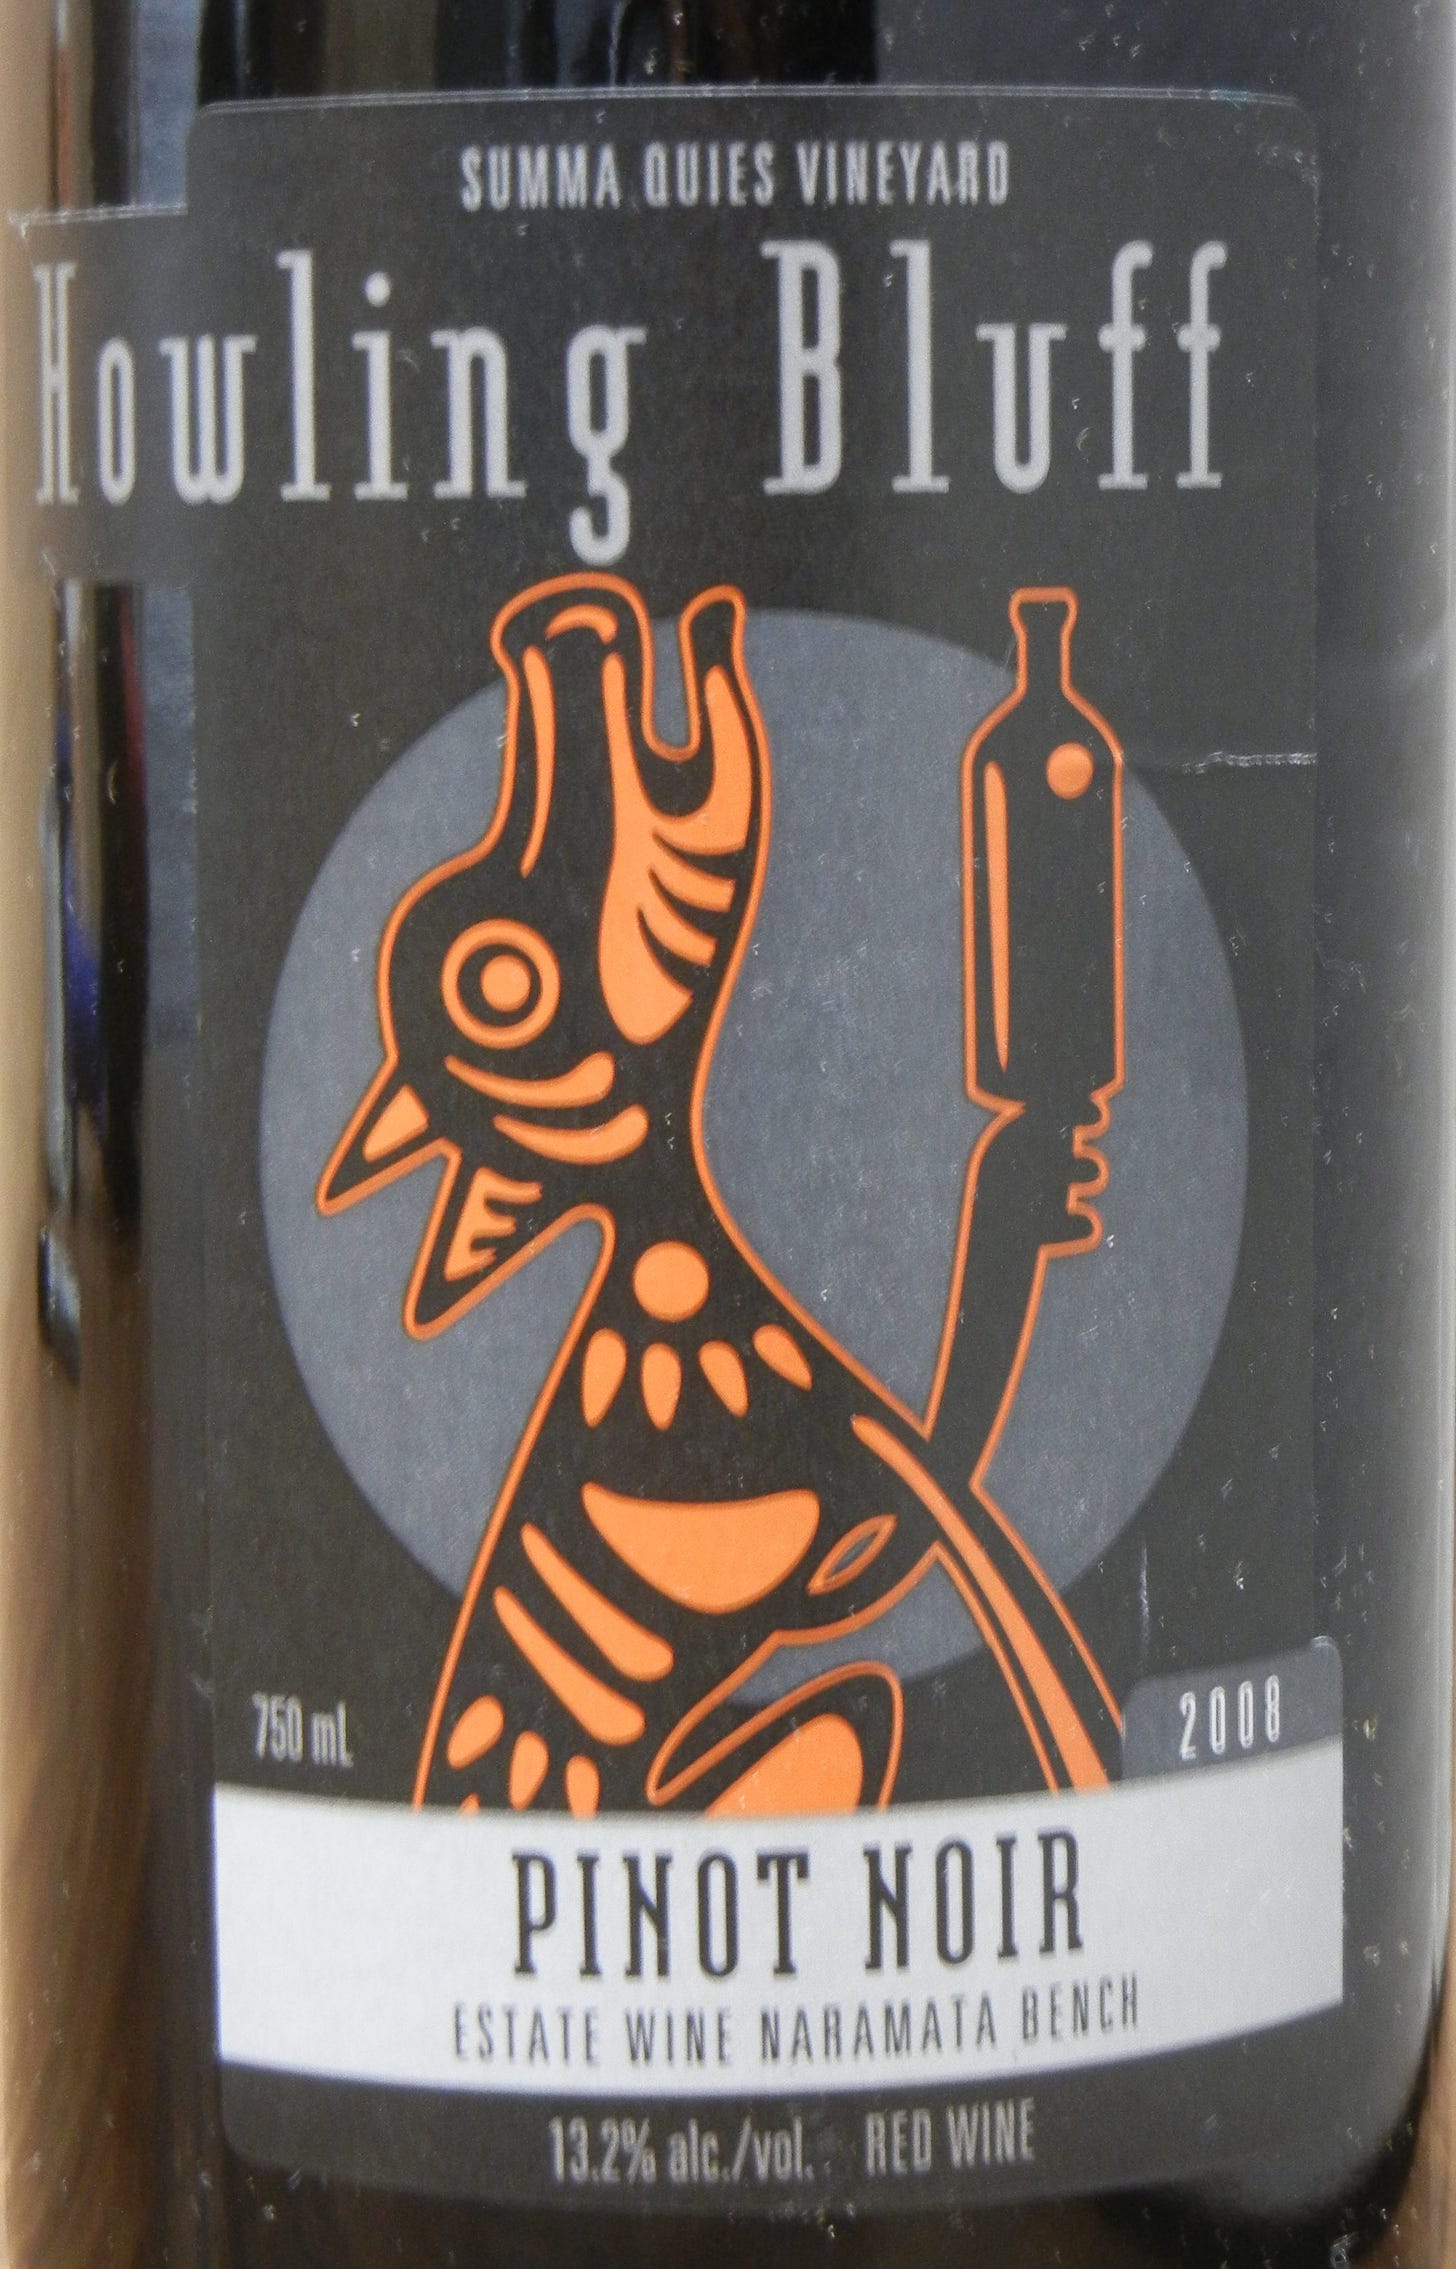 Howling Bluff Summa Quies Pinot Noir 2008 Label - BC Pinot Noir Tasting Review 4